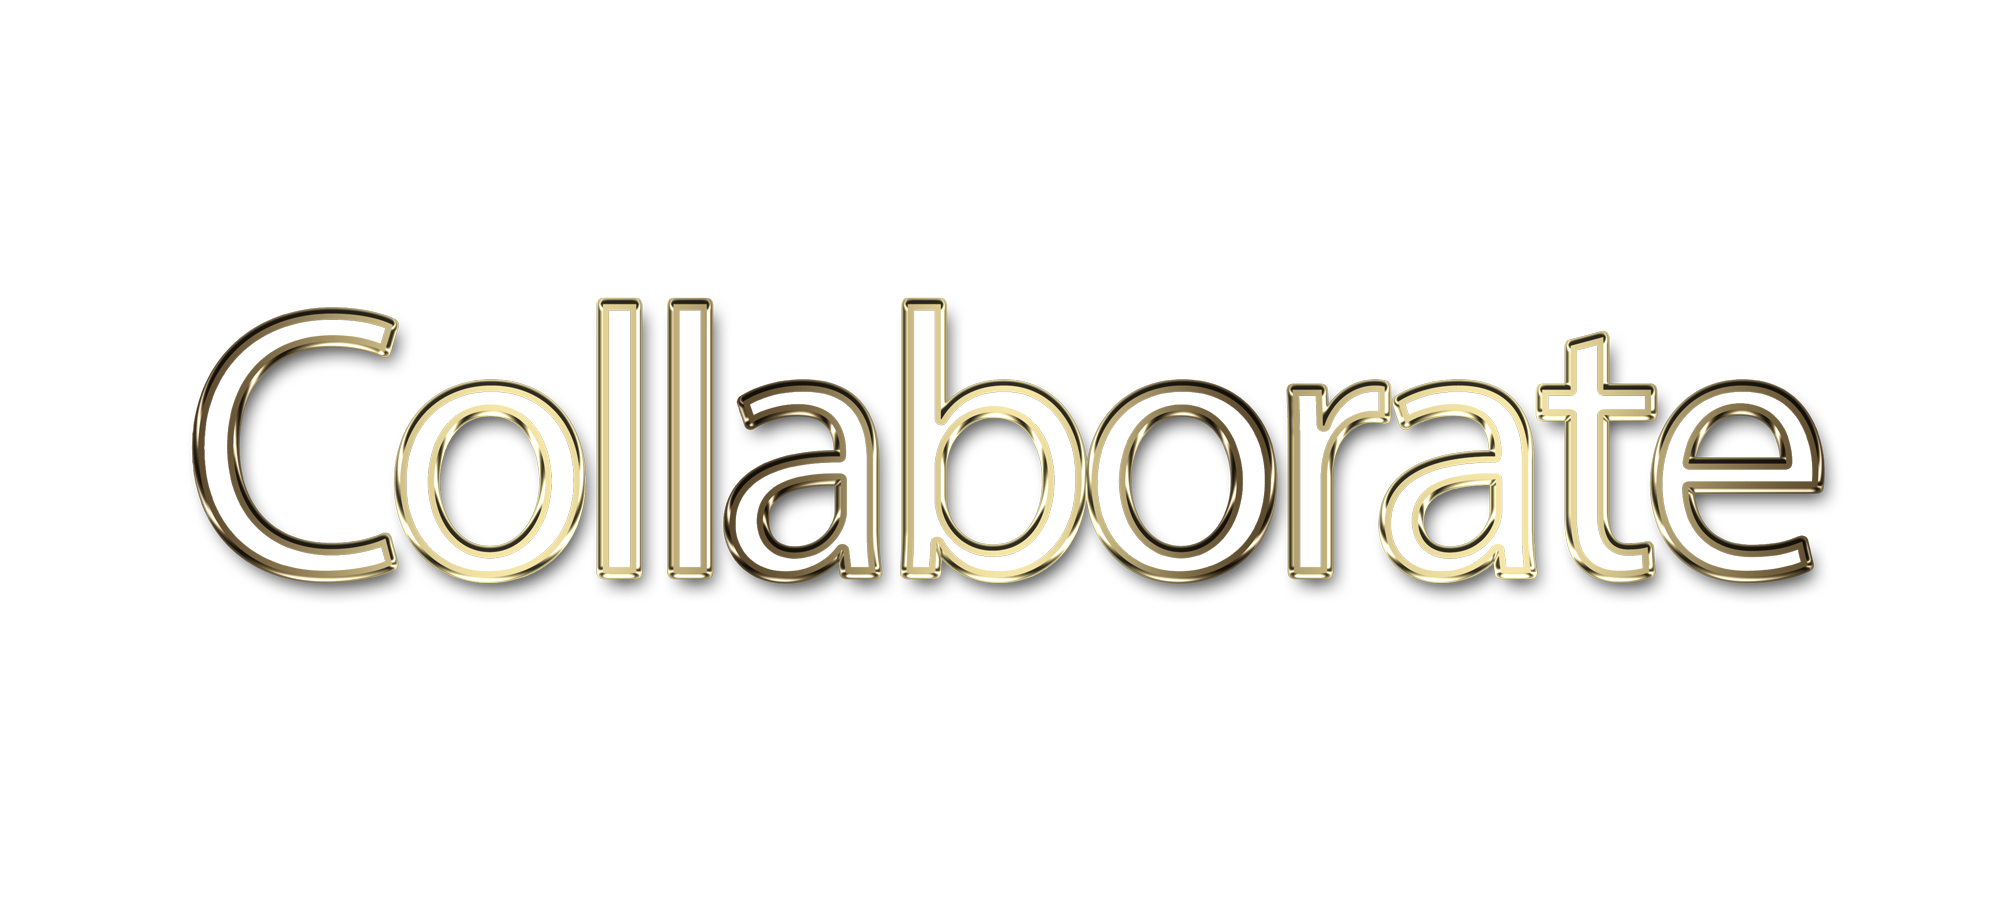 Collaborate png, word Collaborate png, Collaborate word png, Collaborate text png, Collaborate letters png, Collaborate word art typography PNG images, transparent png